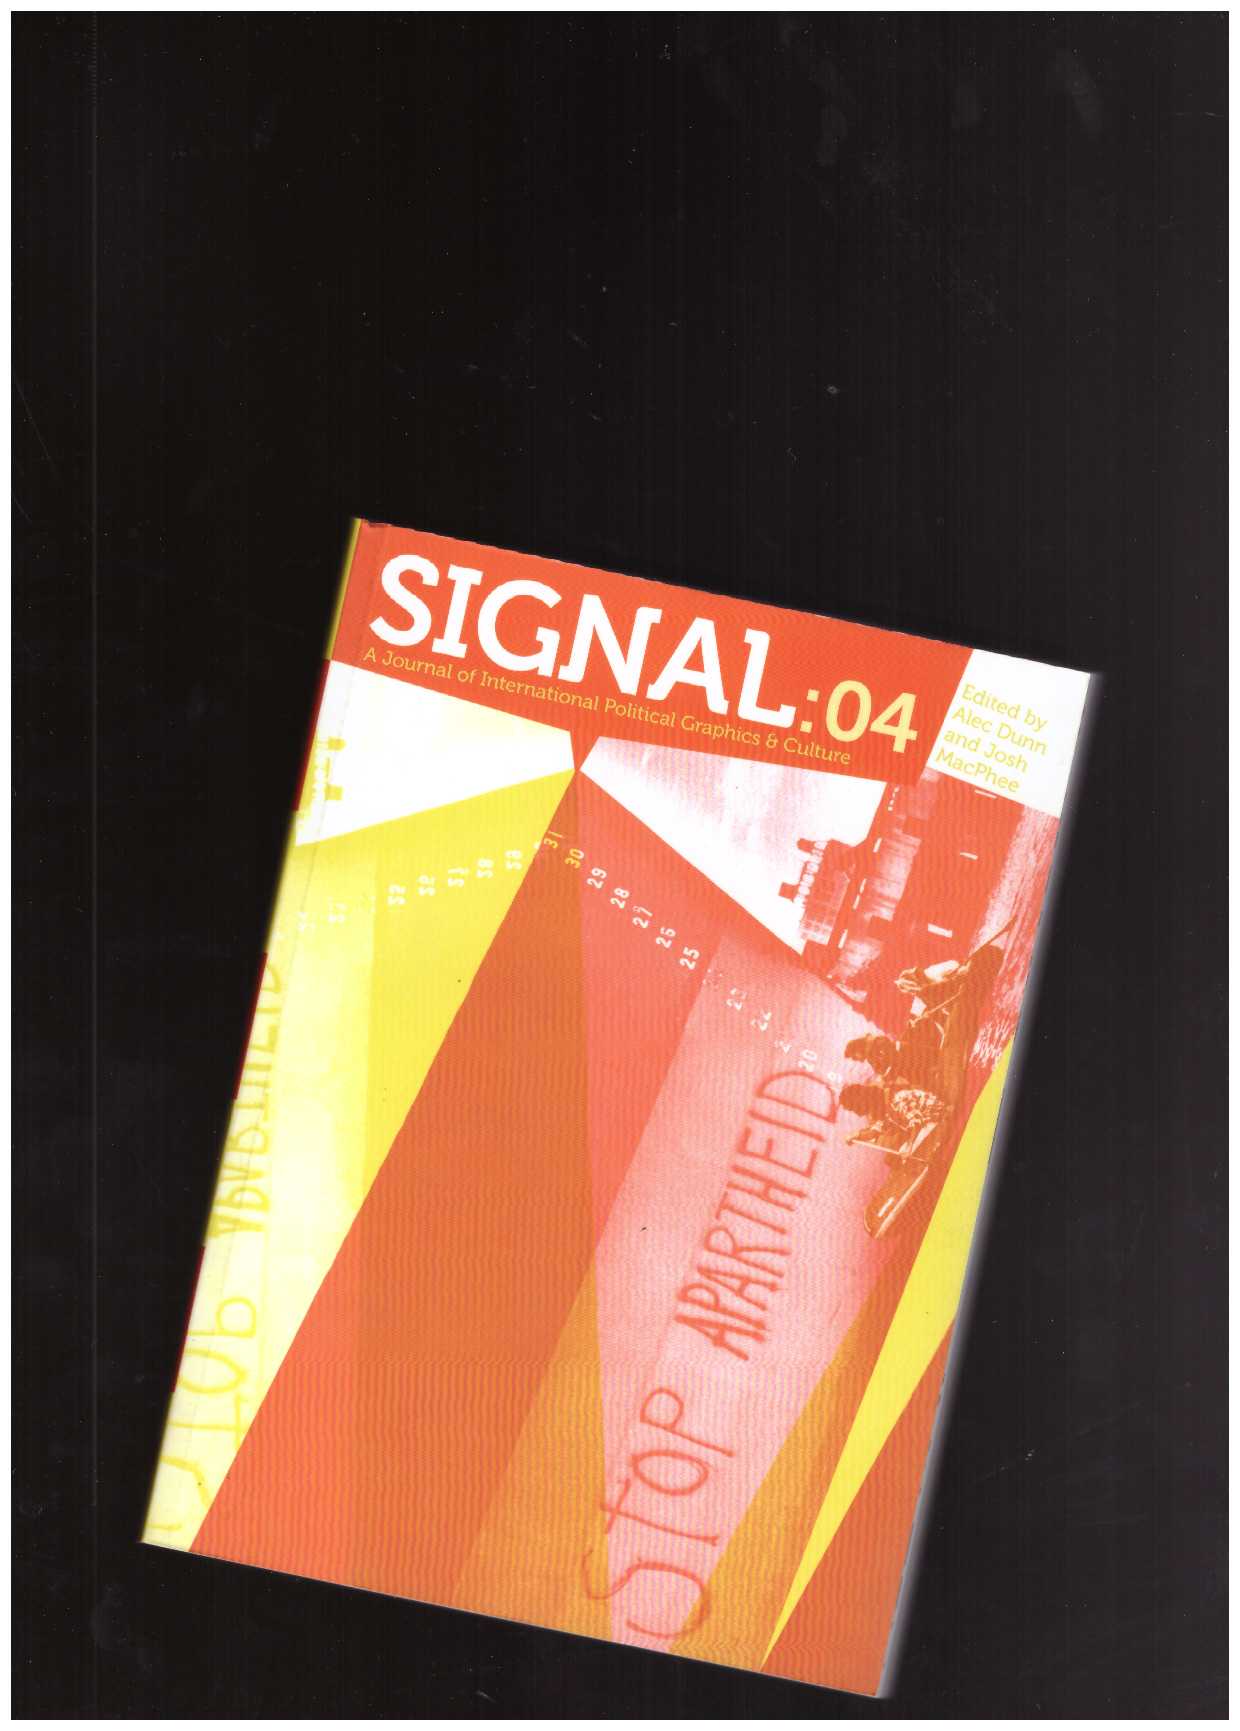 DUNN, Alec; MACPHEE, Josh (eds.) - Signal #4